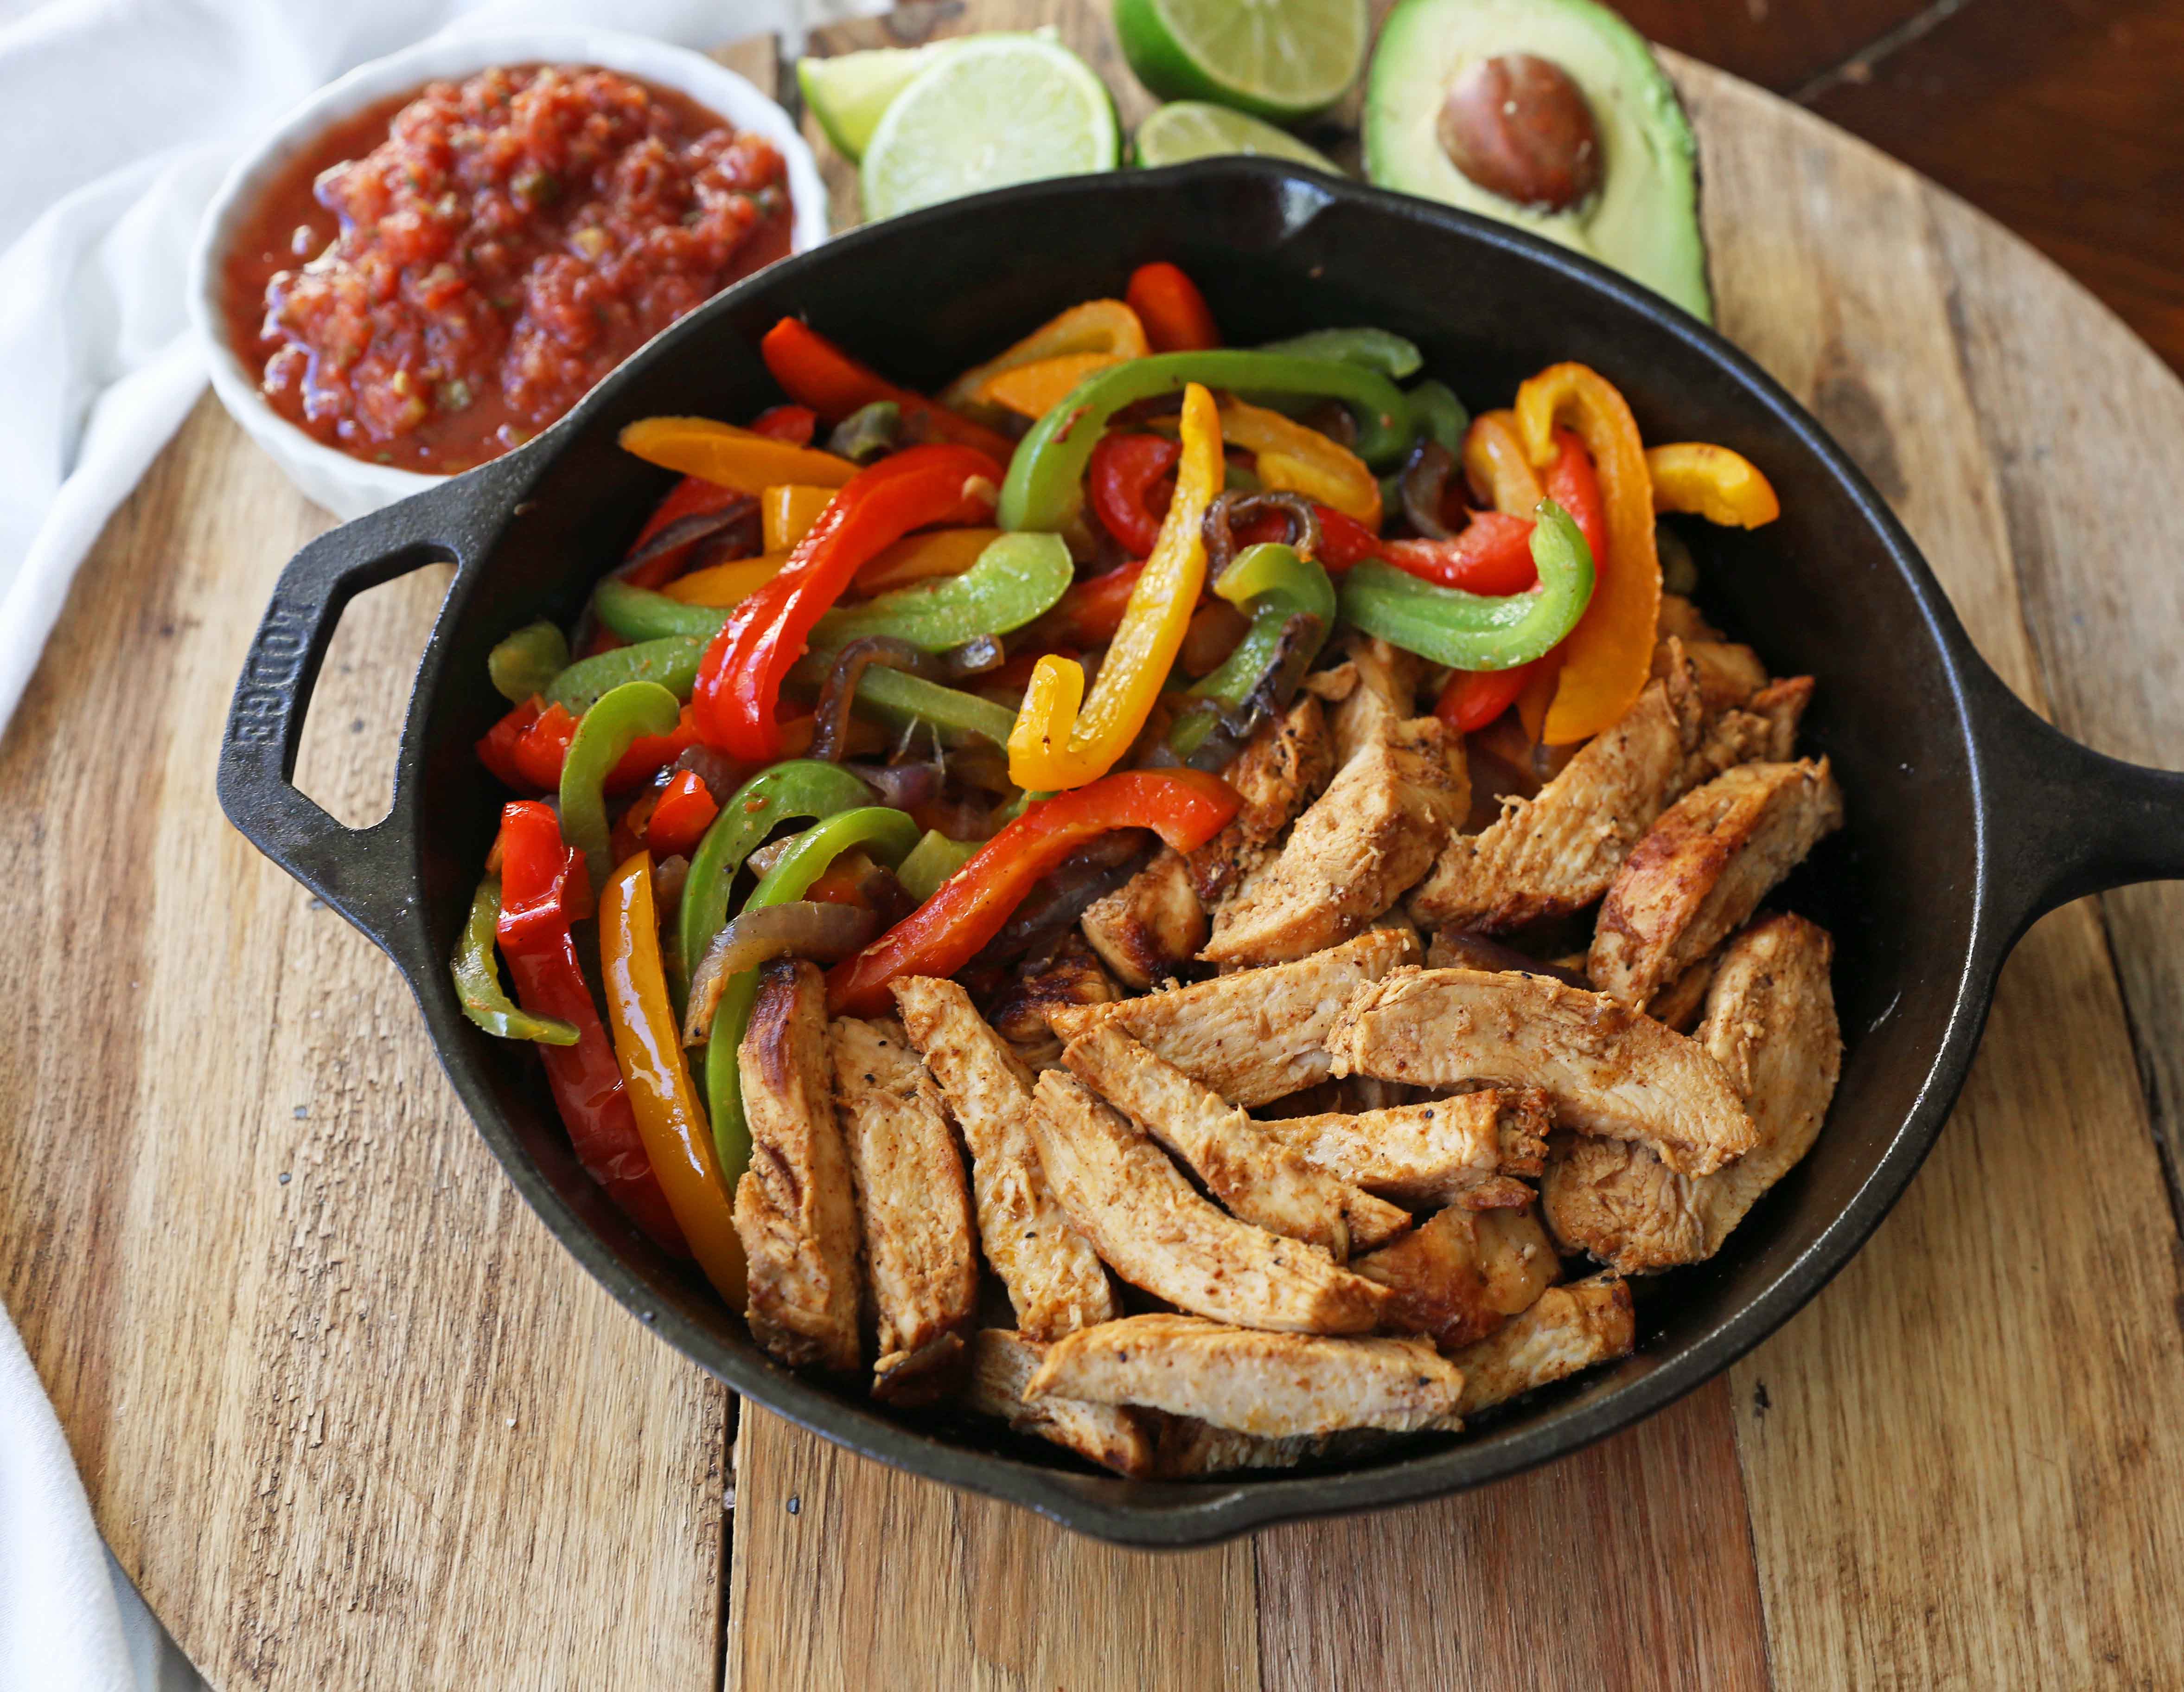 The Best Chicken Fajitas Recipe. Flavorful, juicy, seasoned chicken fajitas with sauteed onions and peppers.  The perfect chicken fajitas recipe! www.modernhoney.com #chicken #chickenfajitas #fajitas #mexican #mexicanfood 